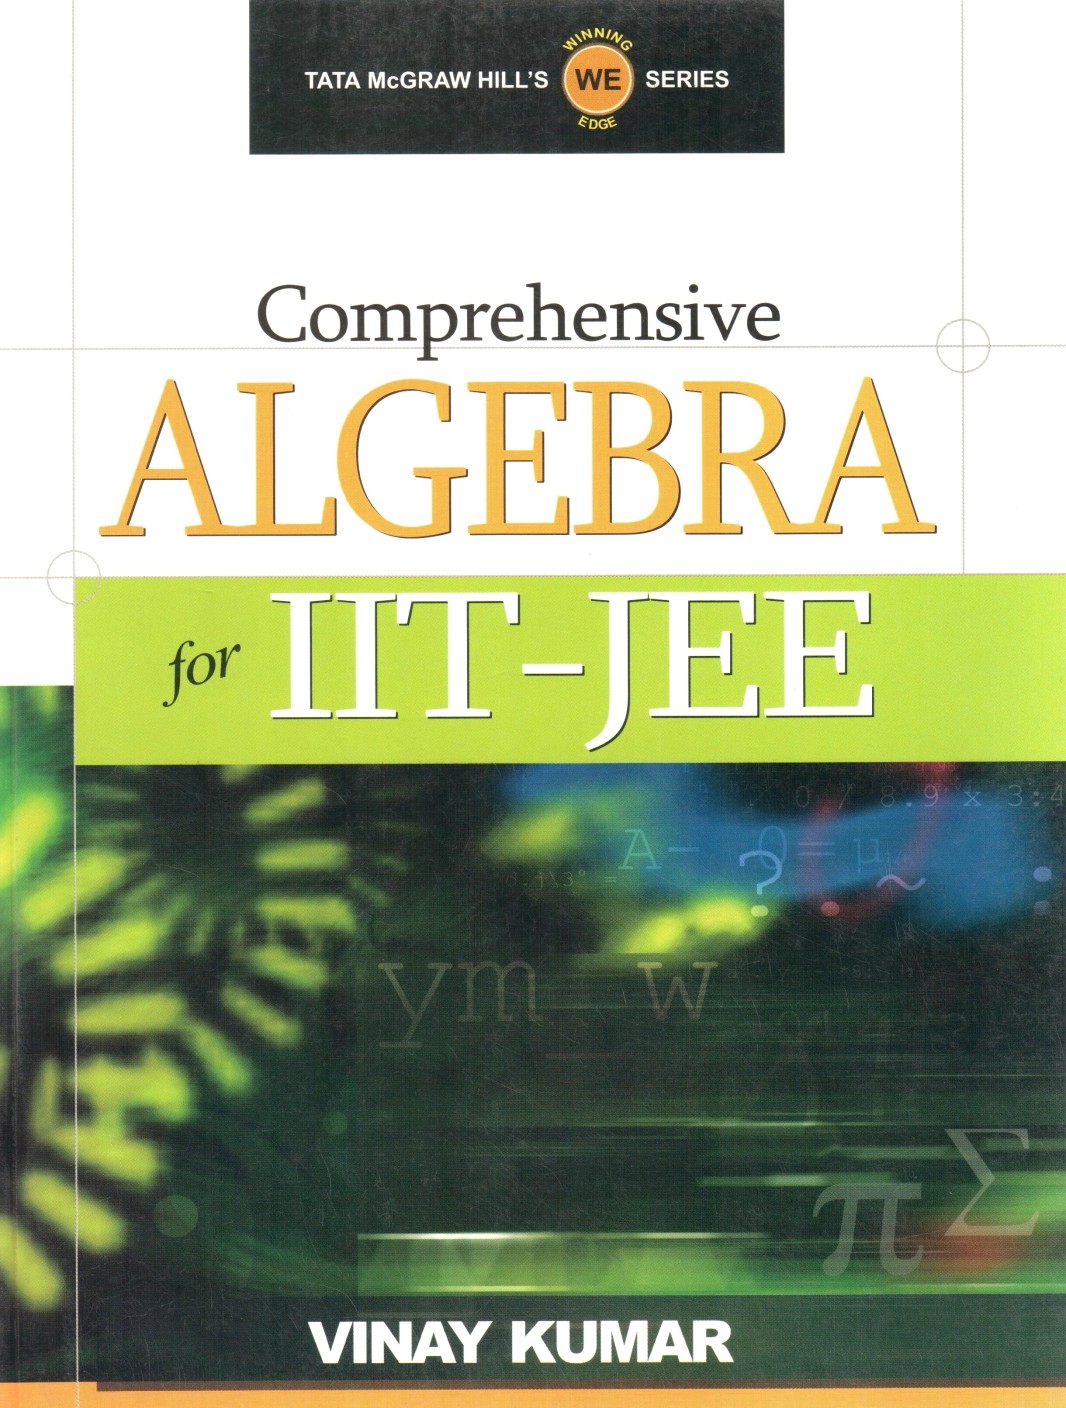 tata mcgraw hill maths for iit jee pdf